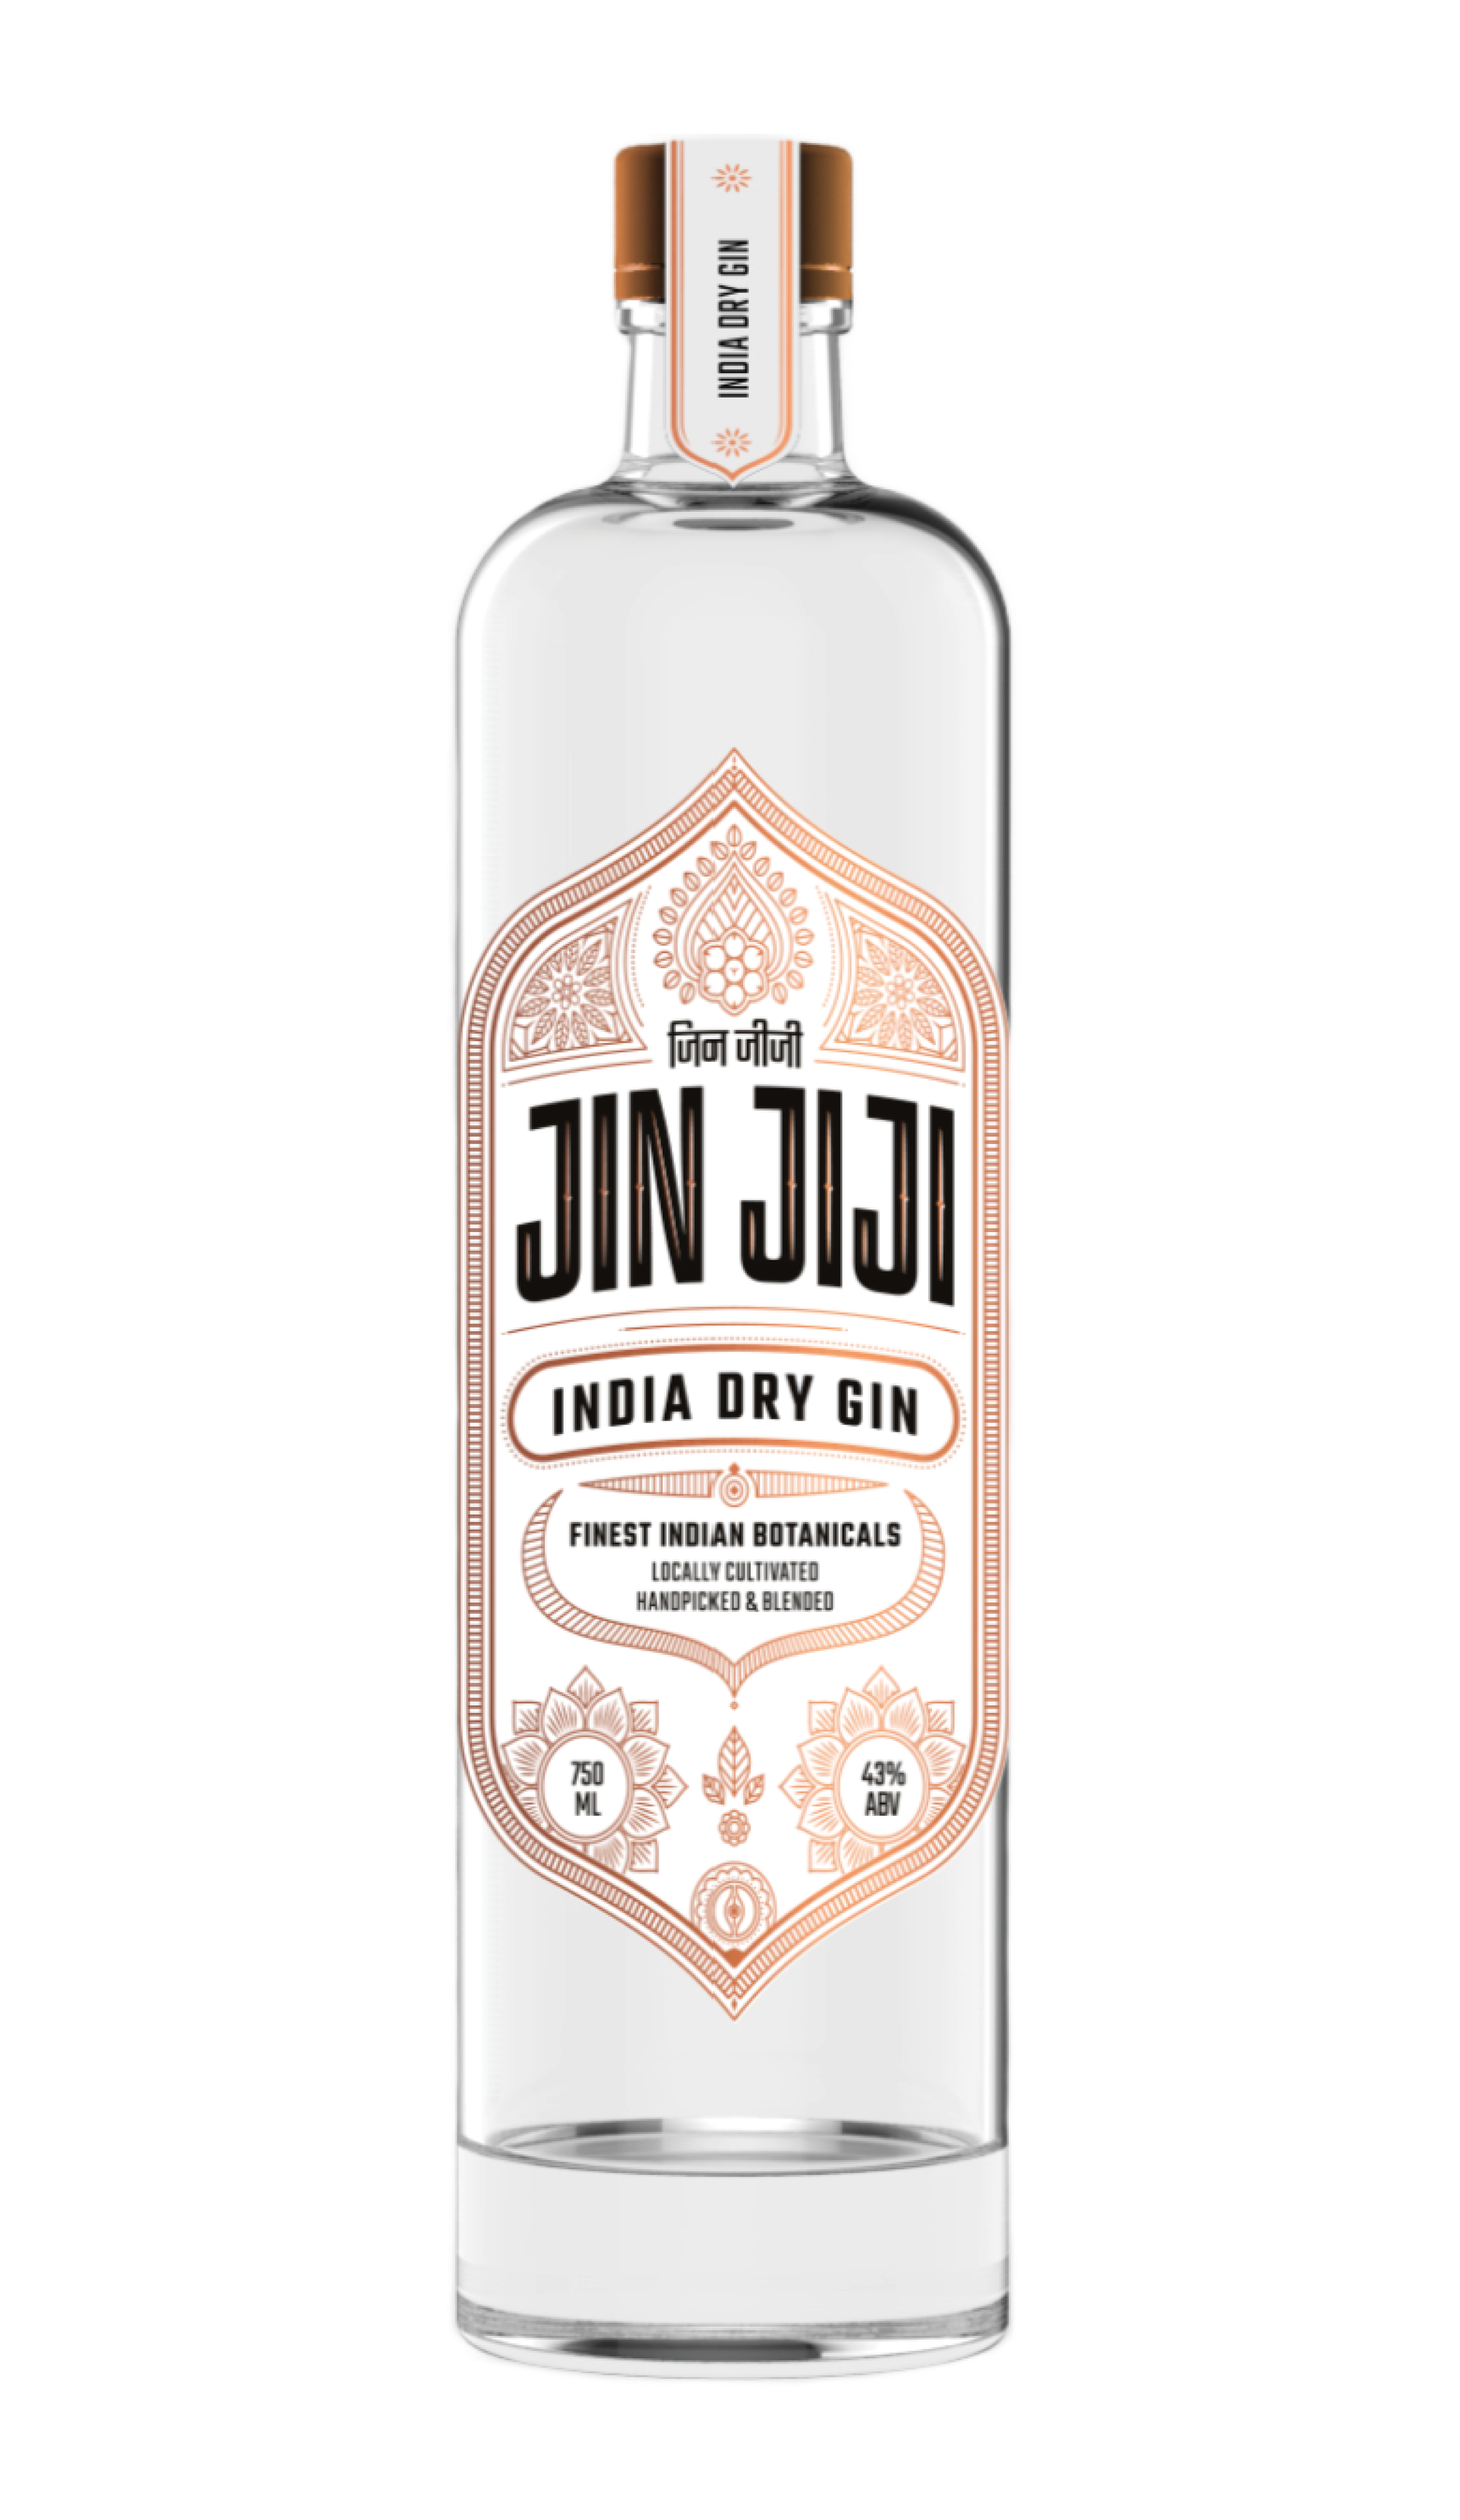 2.	Gin JiJi India Dry Gin						 7,00